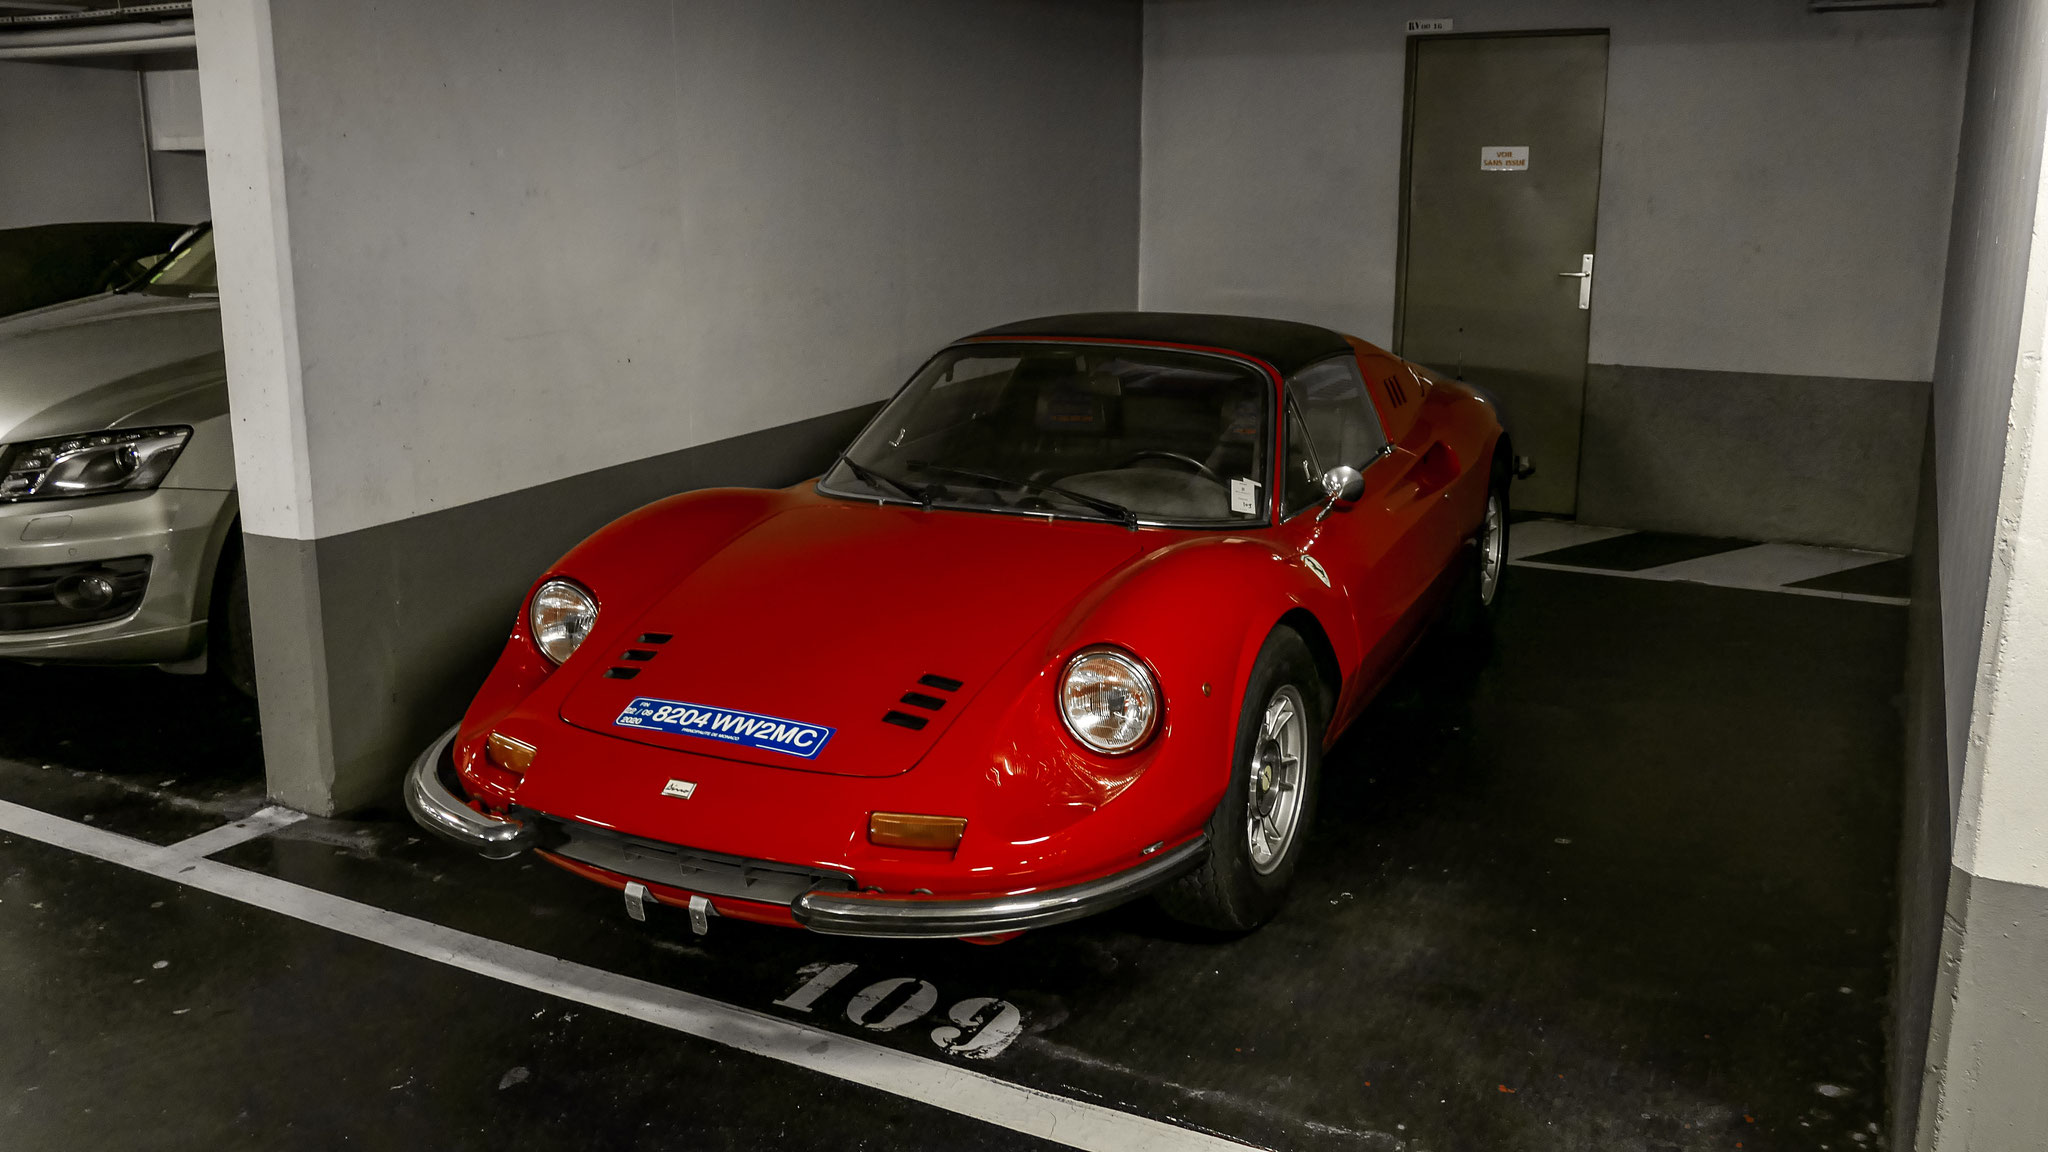 Ferrari Dino 246 - 8204WW2MC (MC)